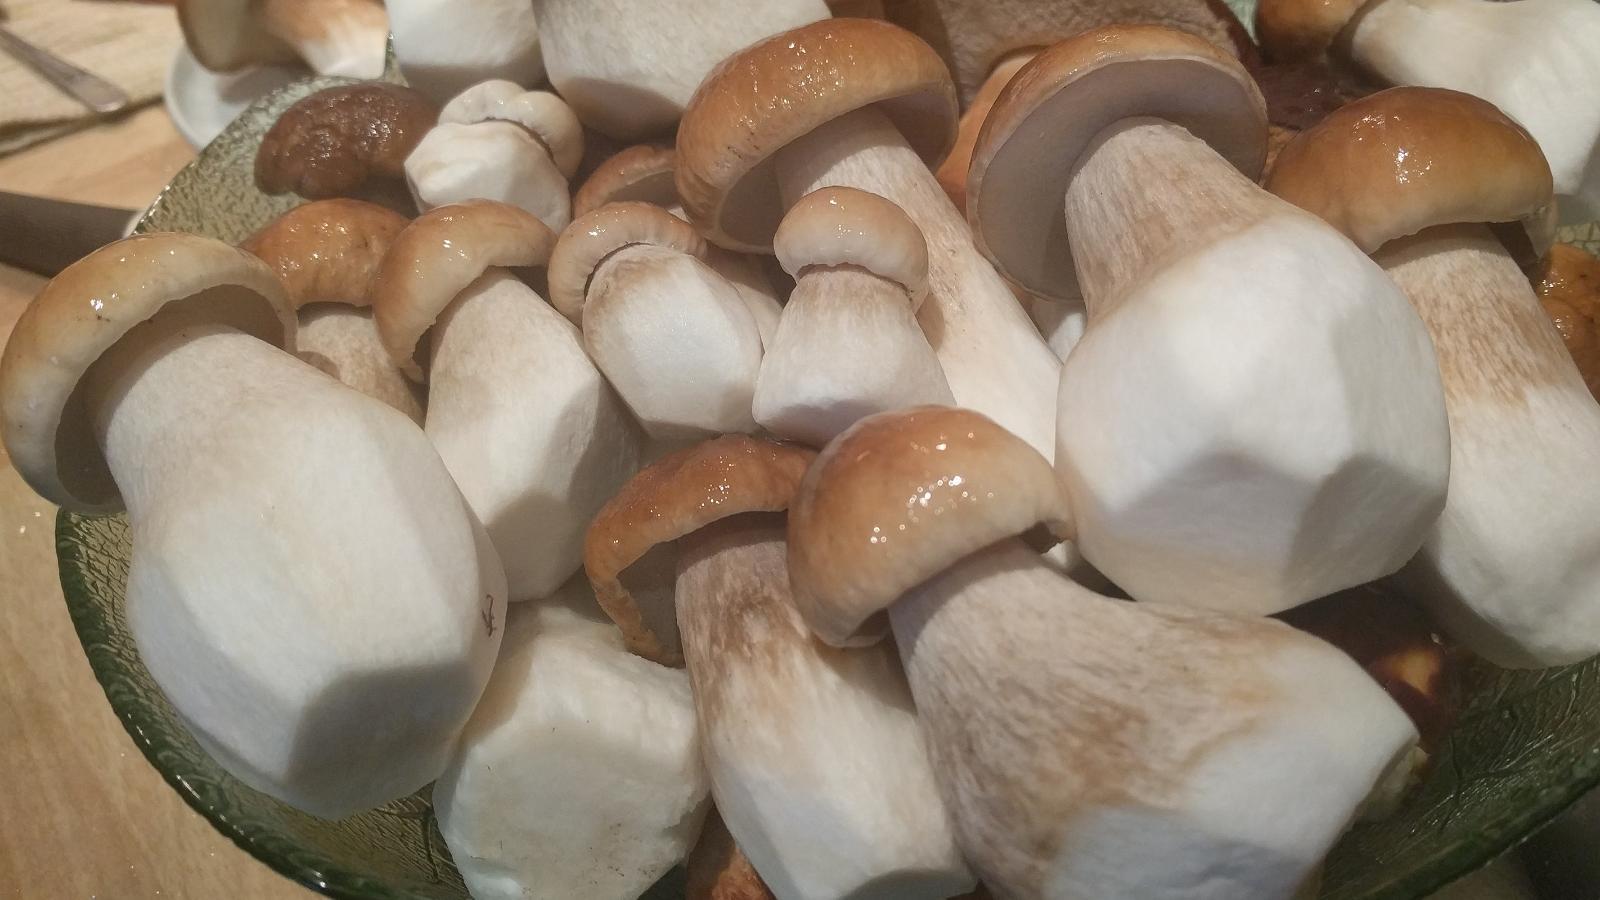 Mushroom trips in Pärnu County